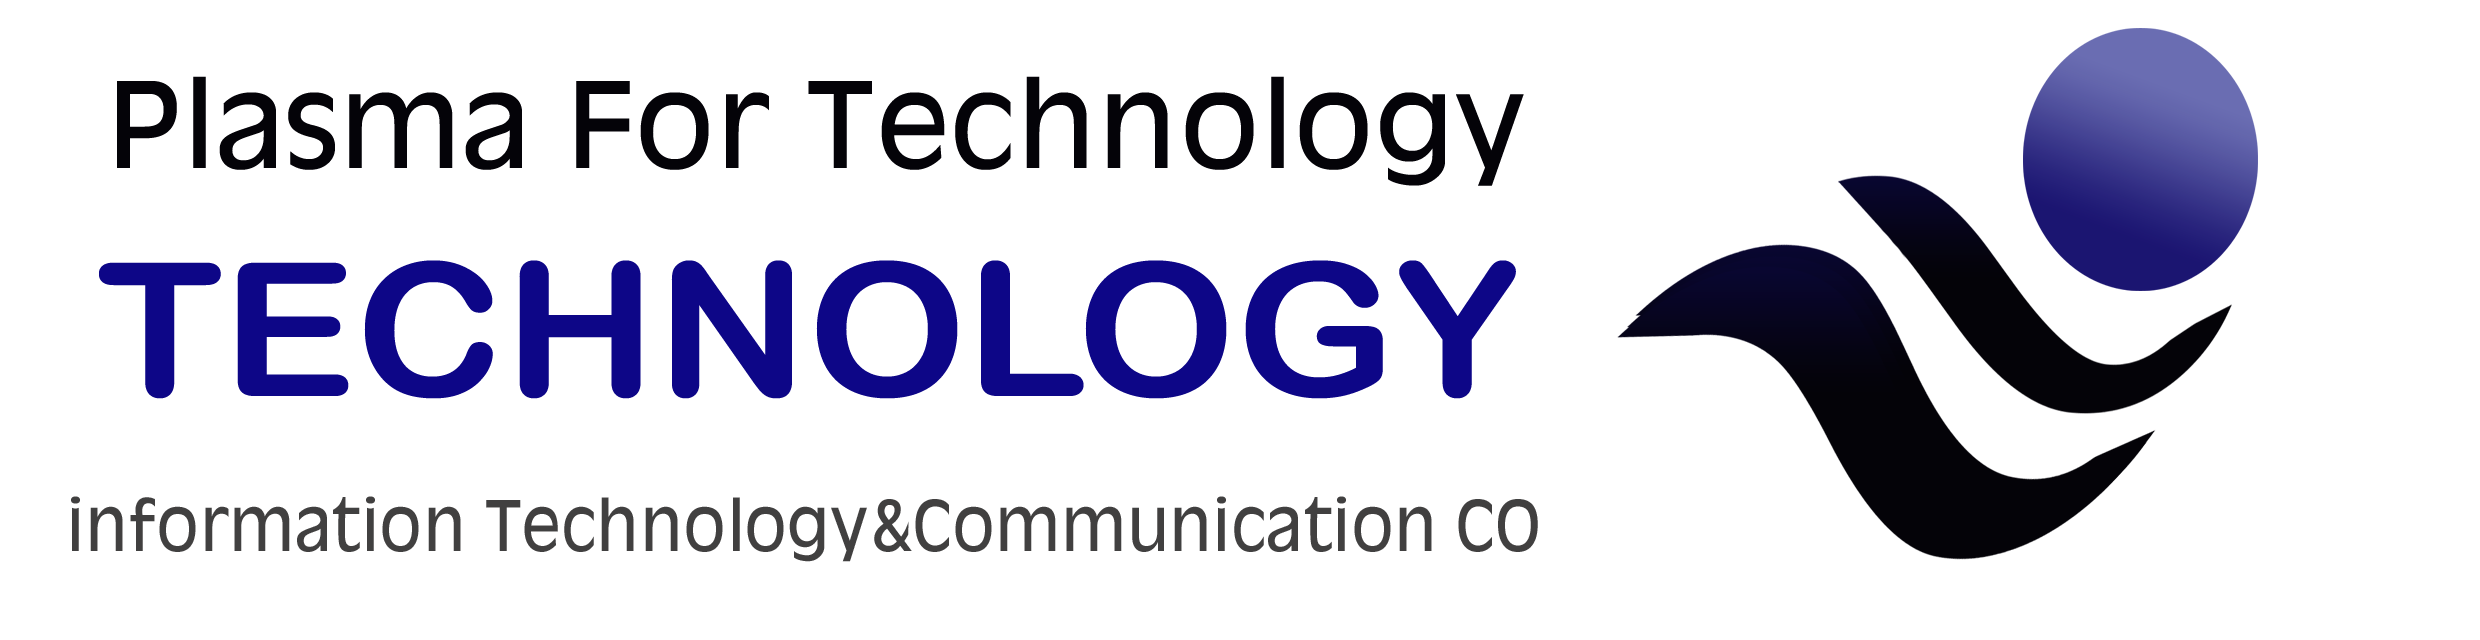 information technology & communication co